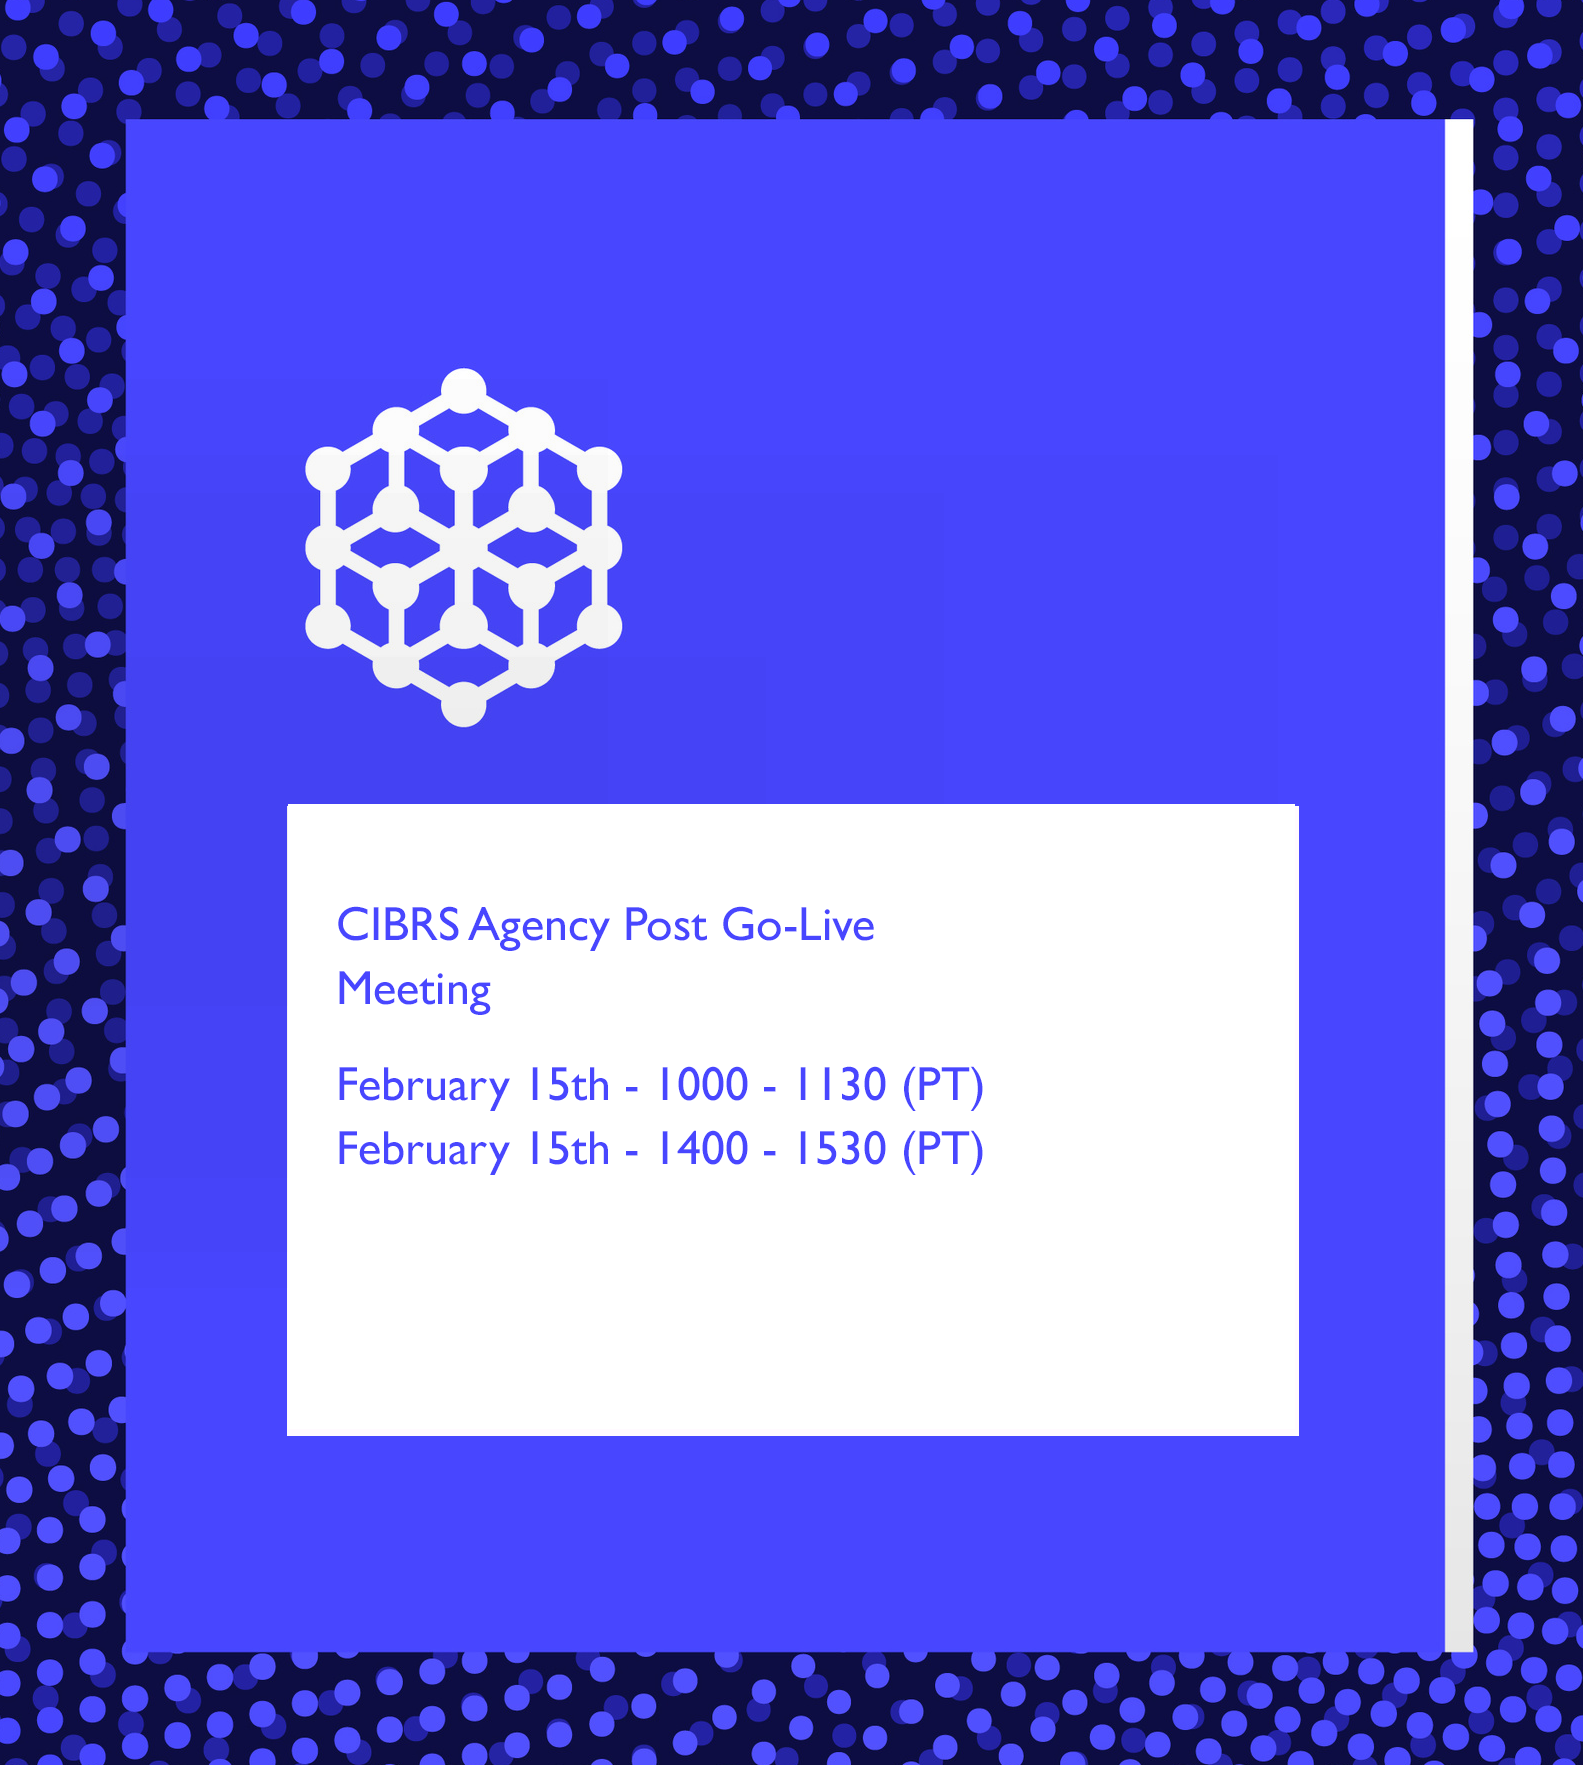 CIBRS Agency Post Go-Live Meeting